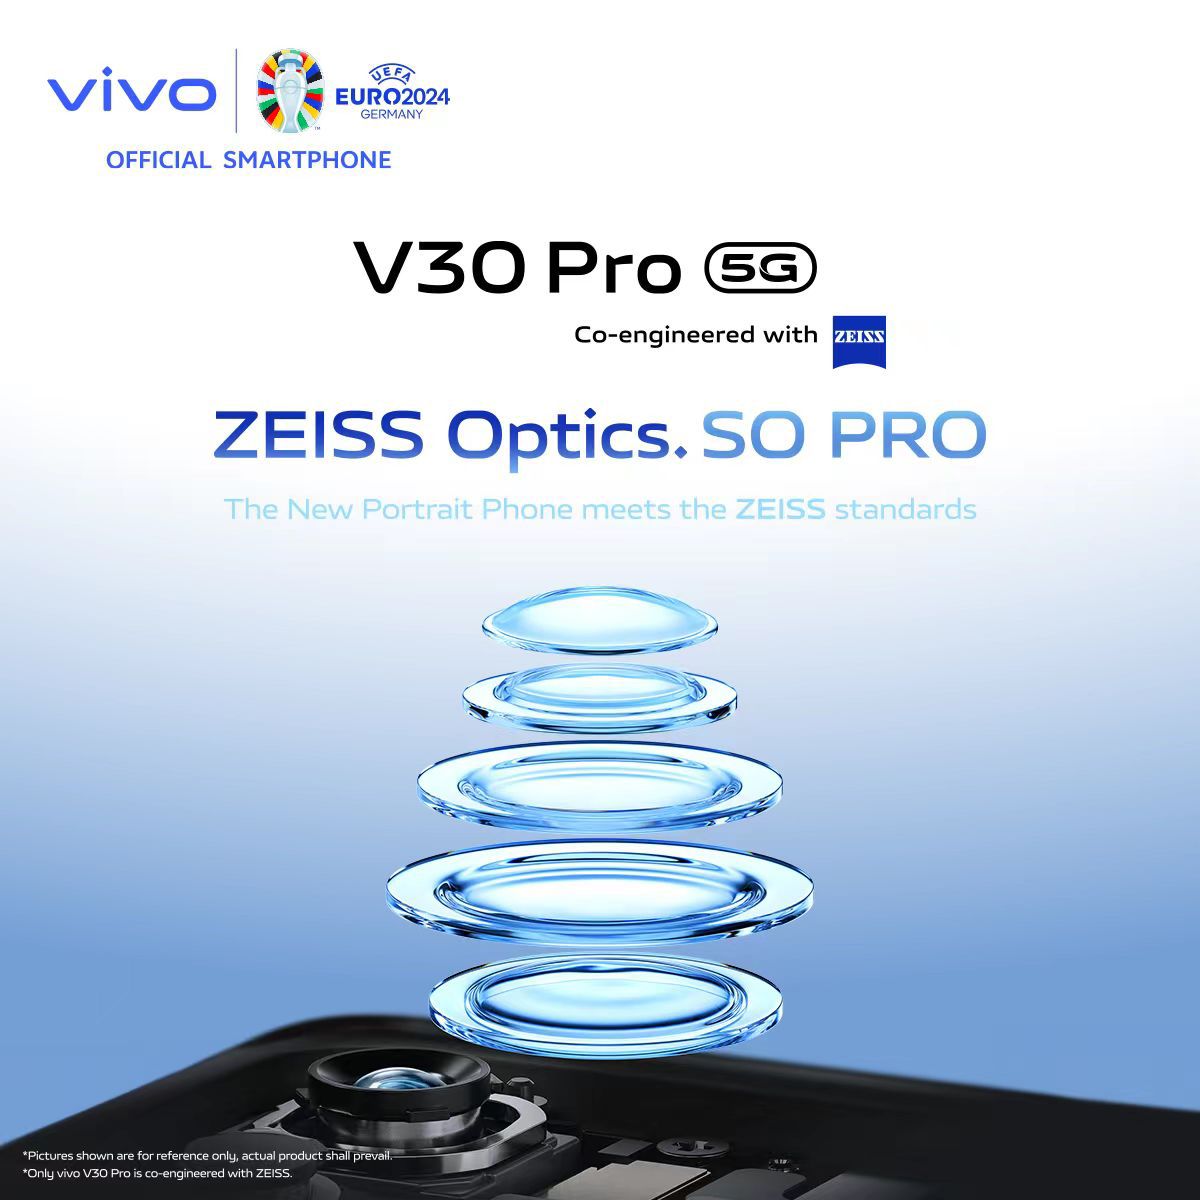 ZEISS Optic. So Pro